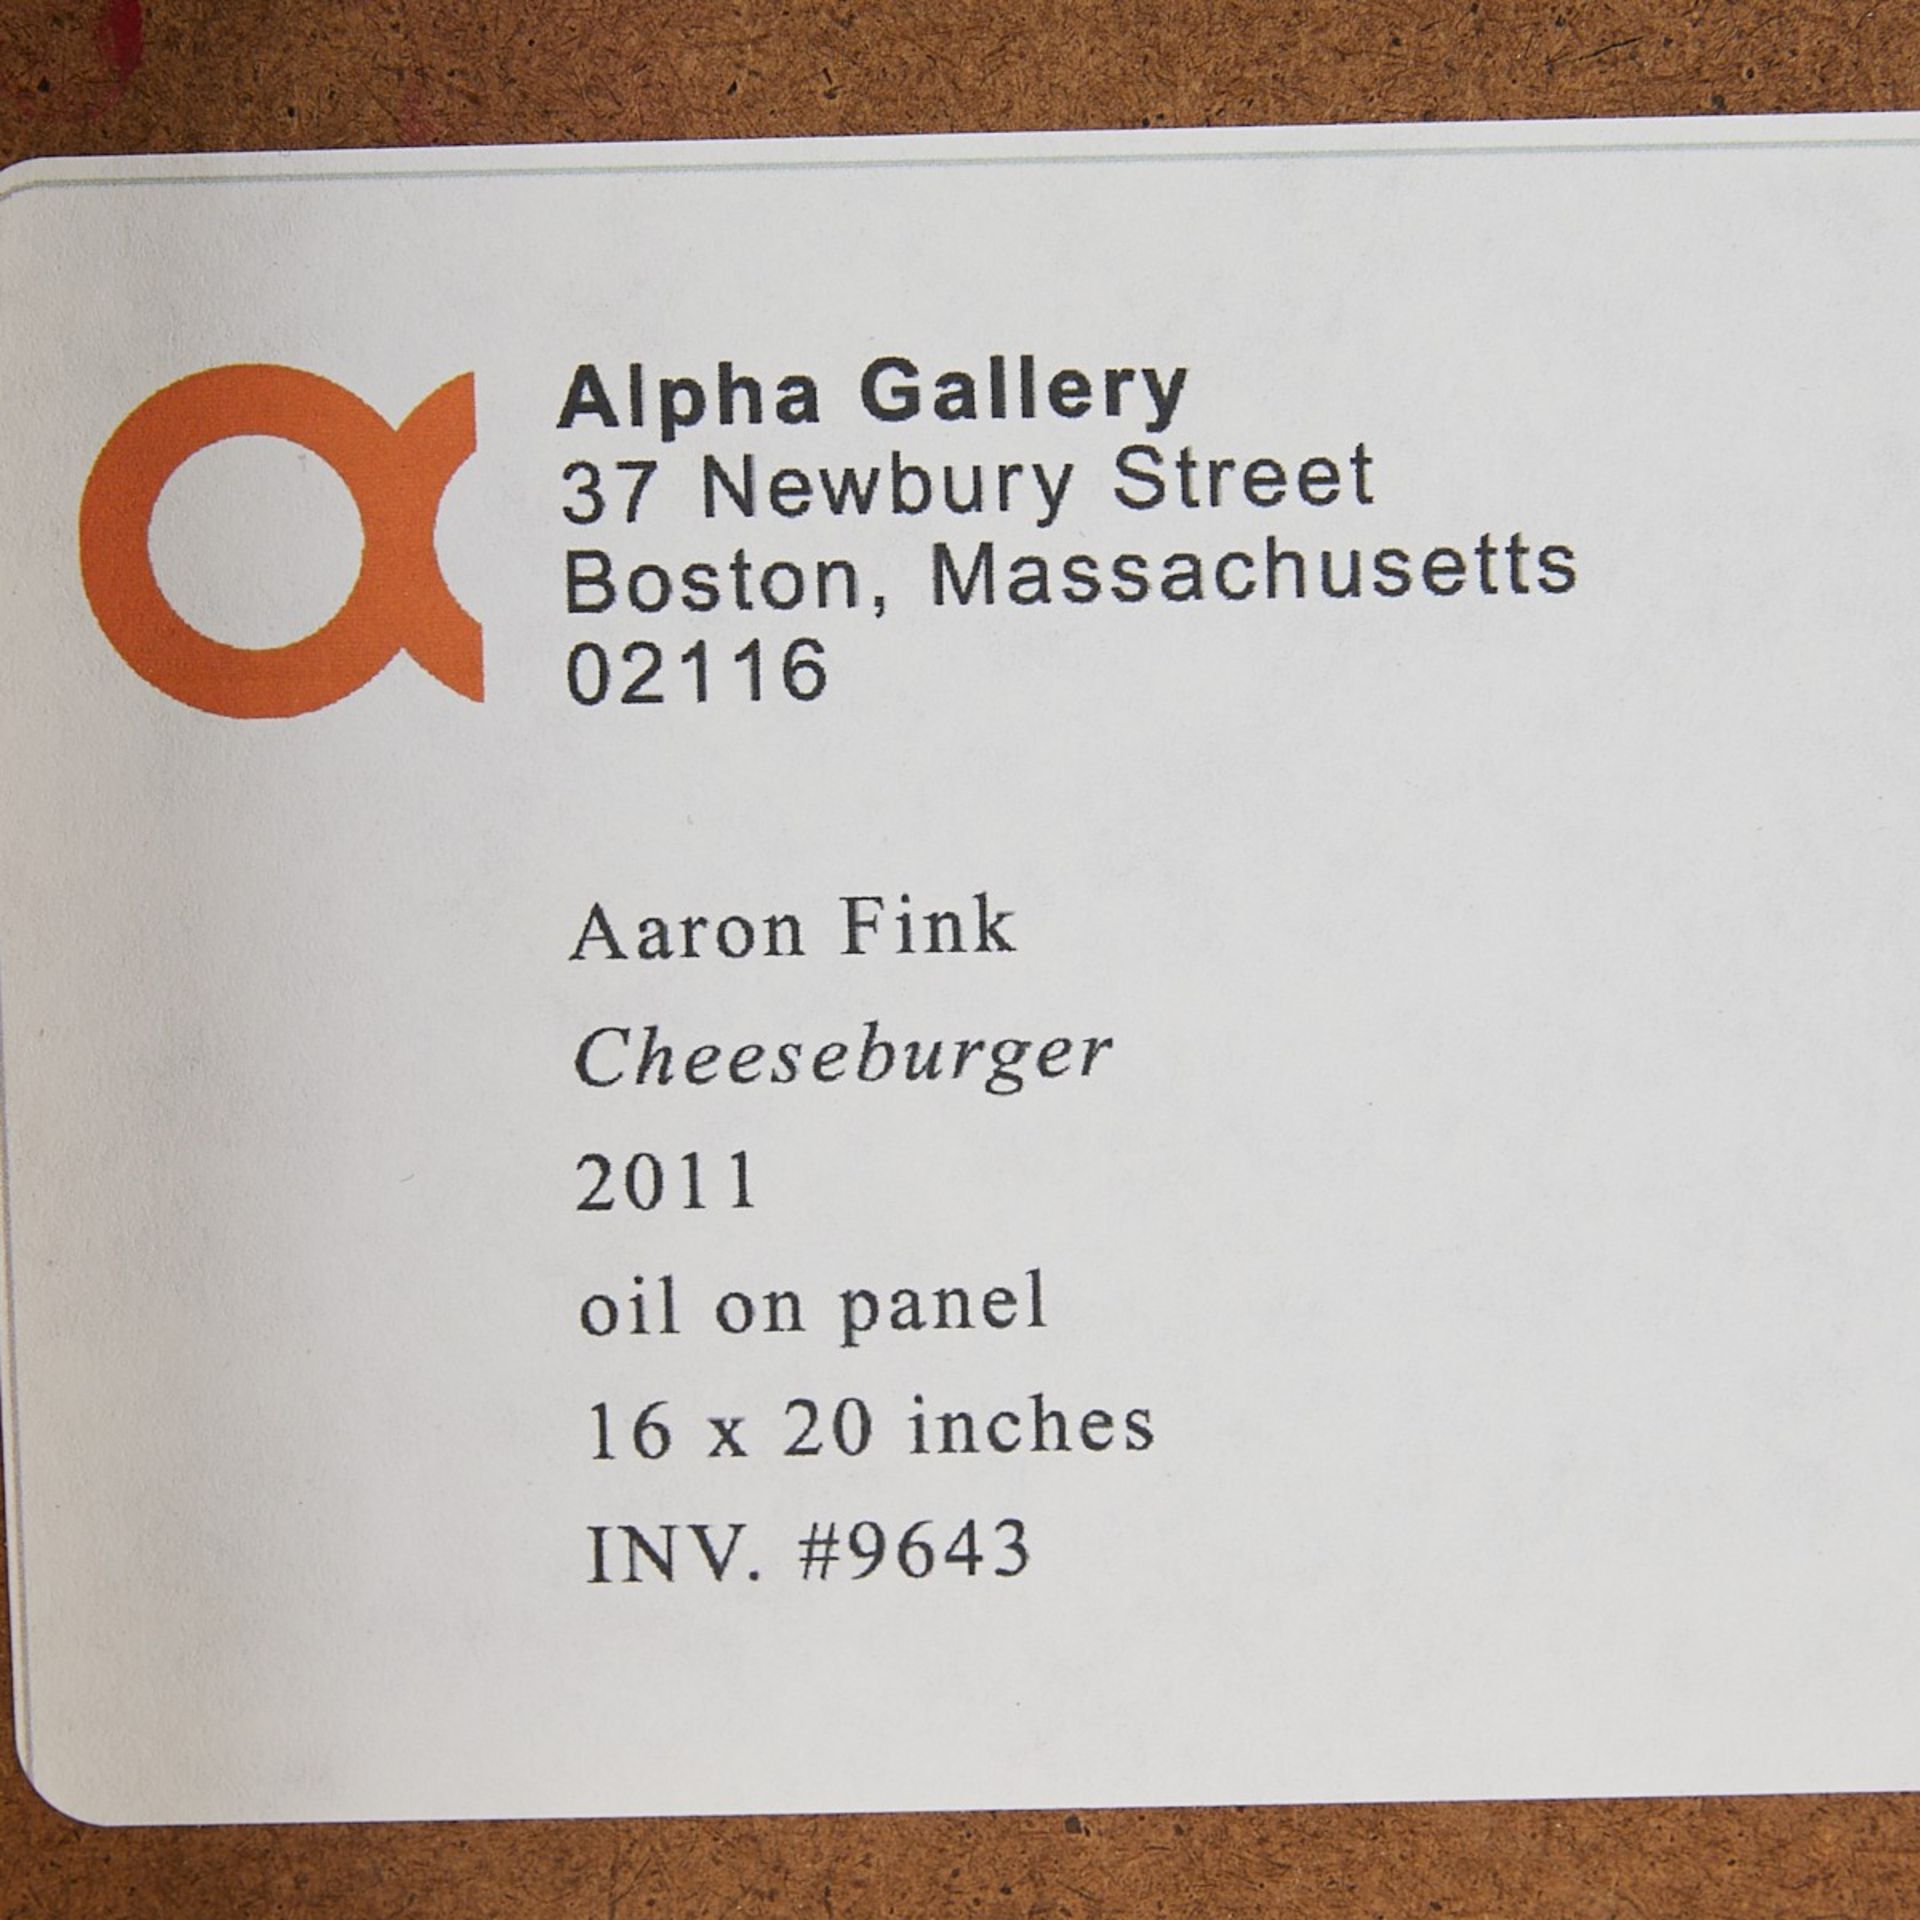 Aaron Fink "Cheeseburger" Oil On Panel 2011 - Image 6 of 6